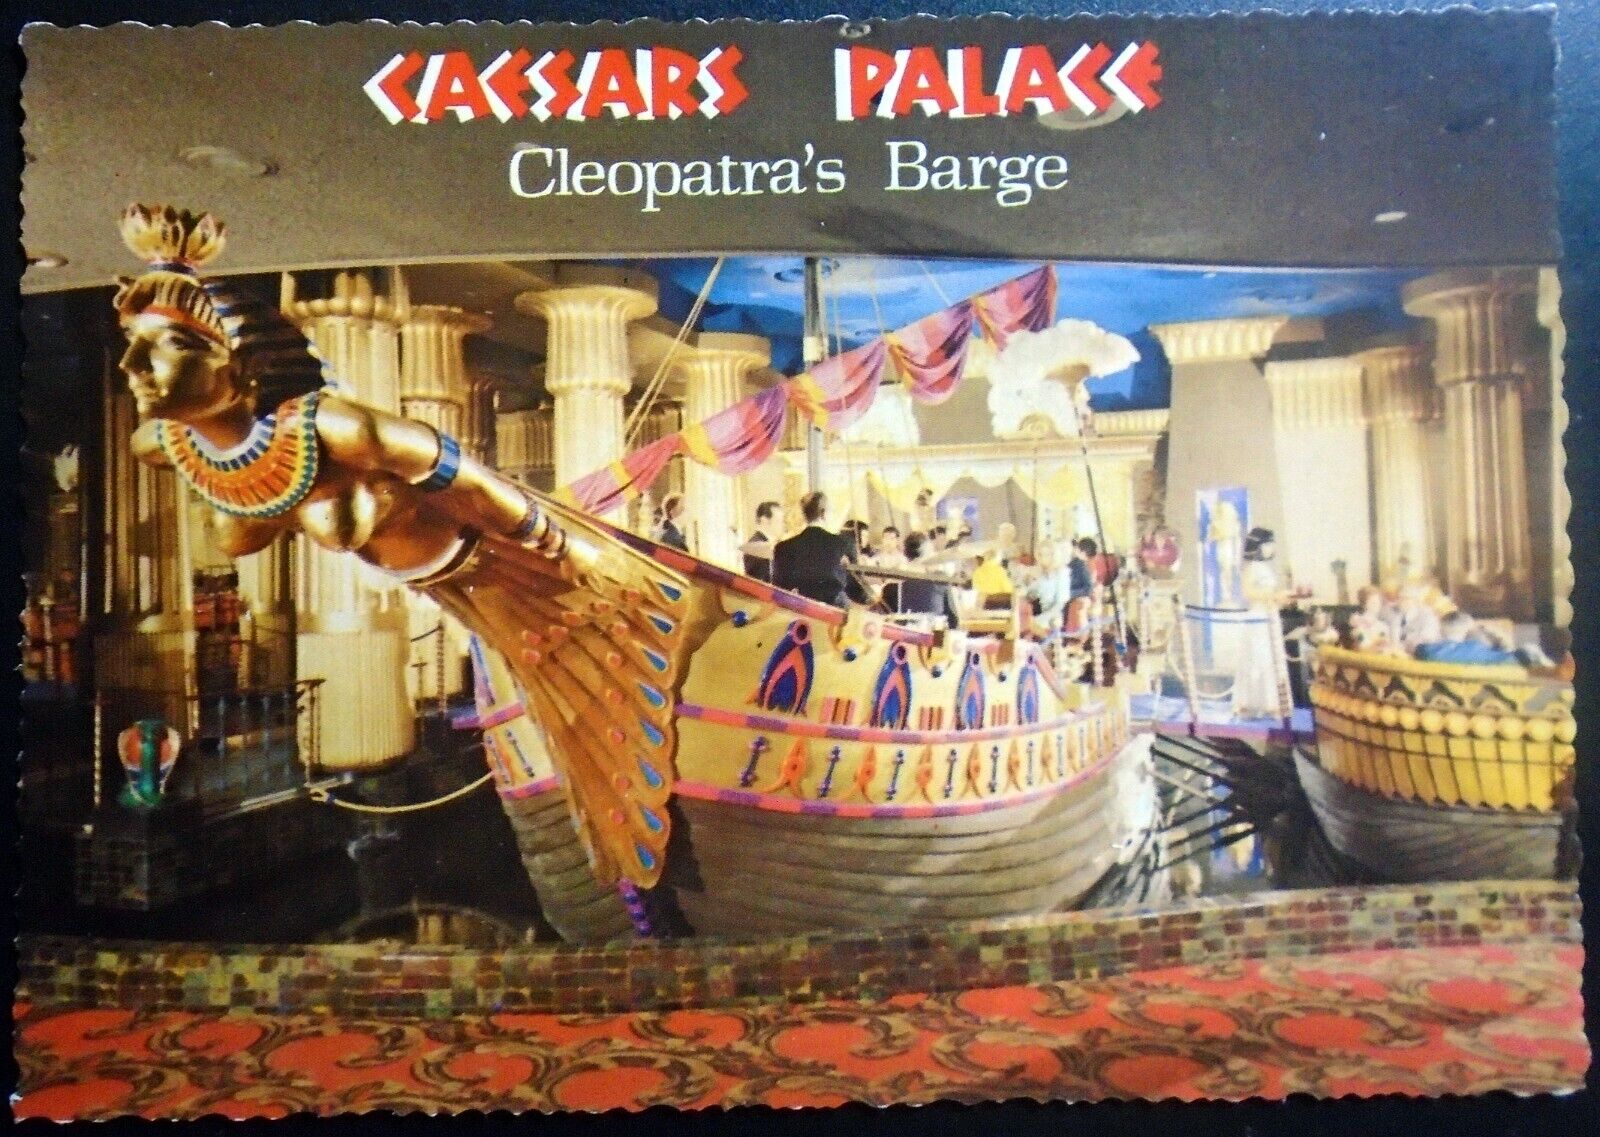 Cleopatra’s Barge, Caesars Palace, Luxury Hotel, S. Las Vegas Blvd., Nevada